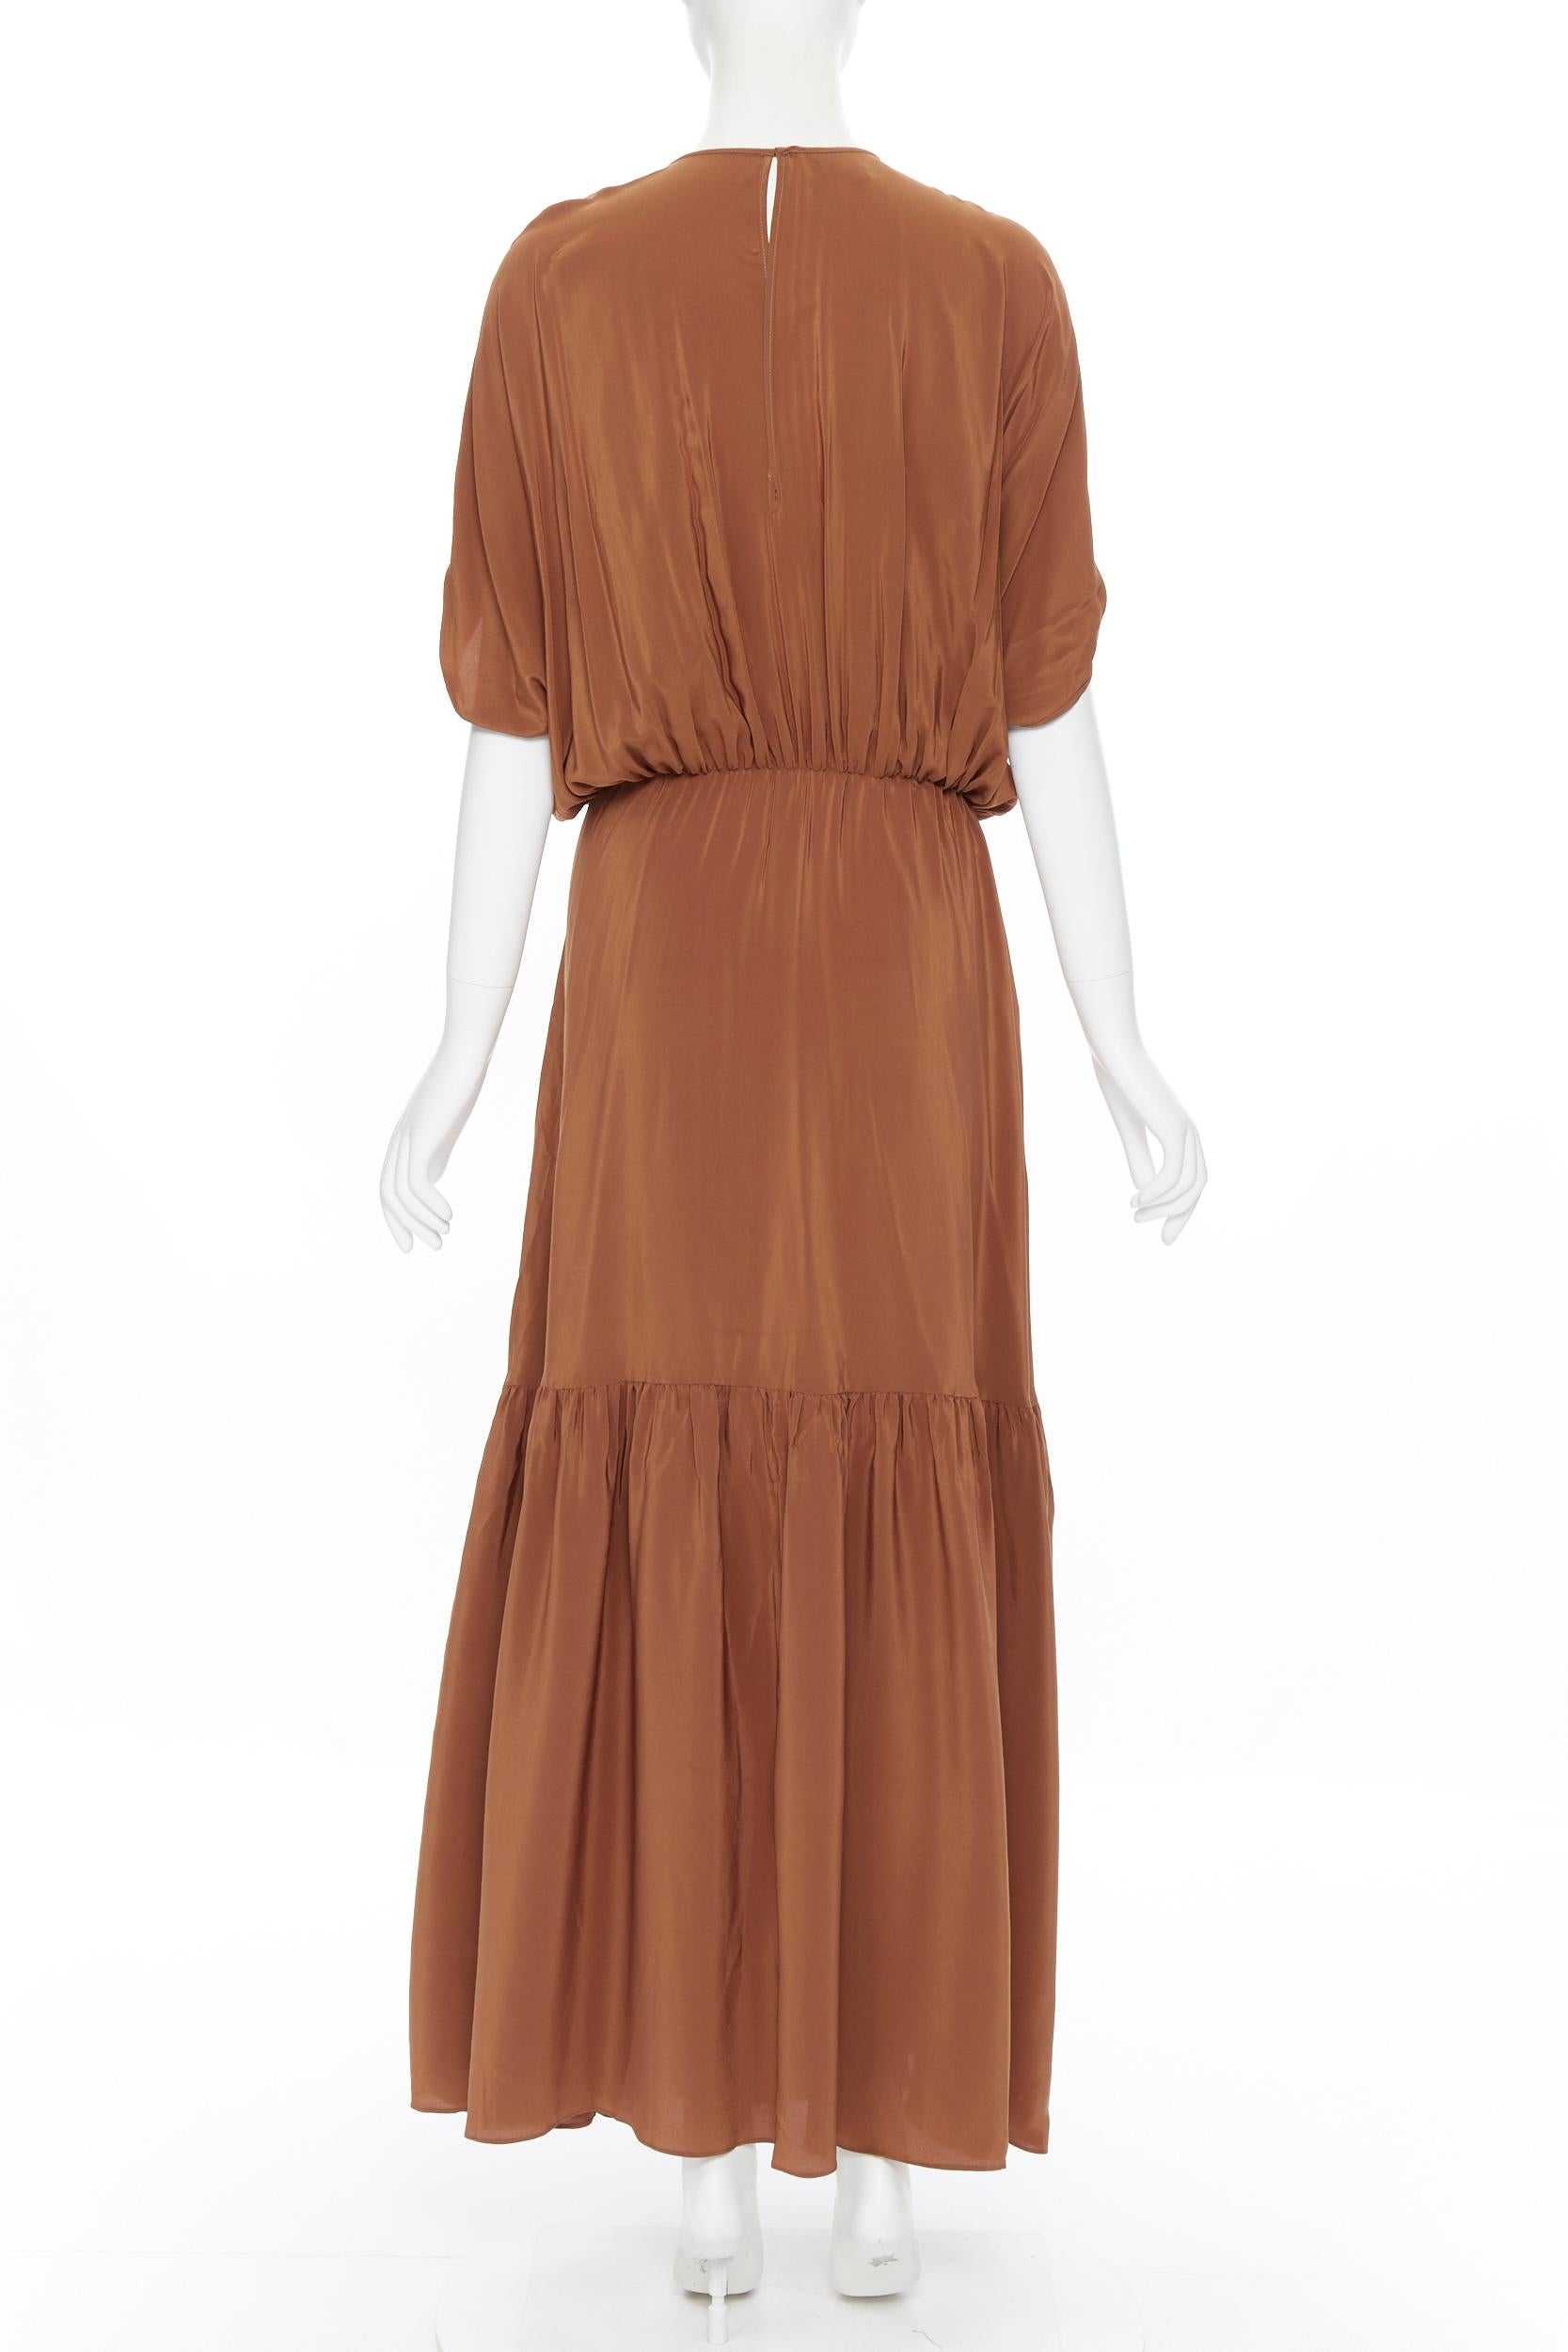 brown silk dress